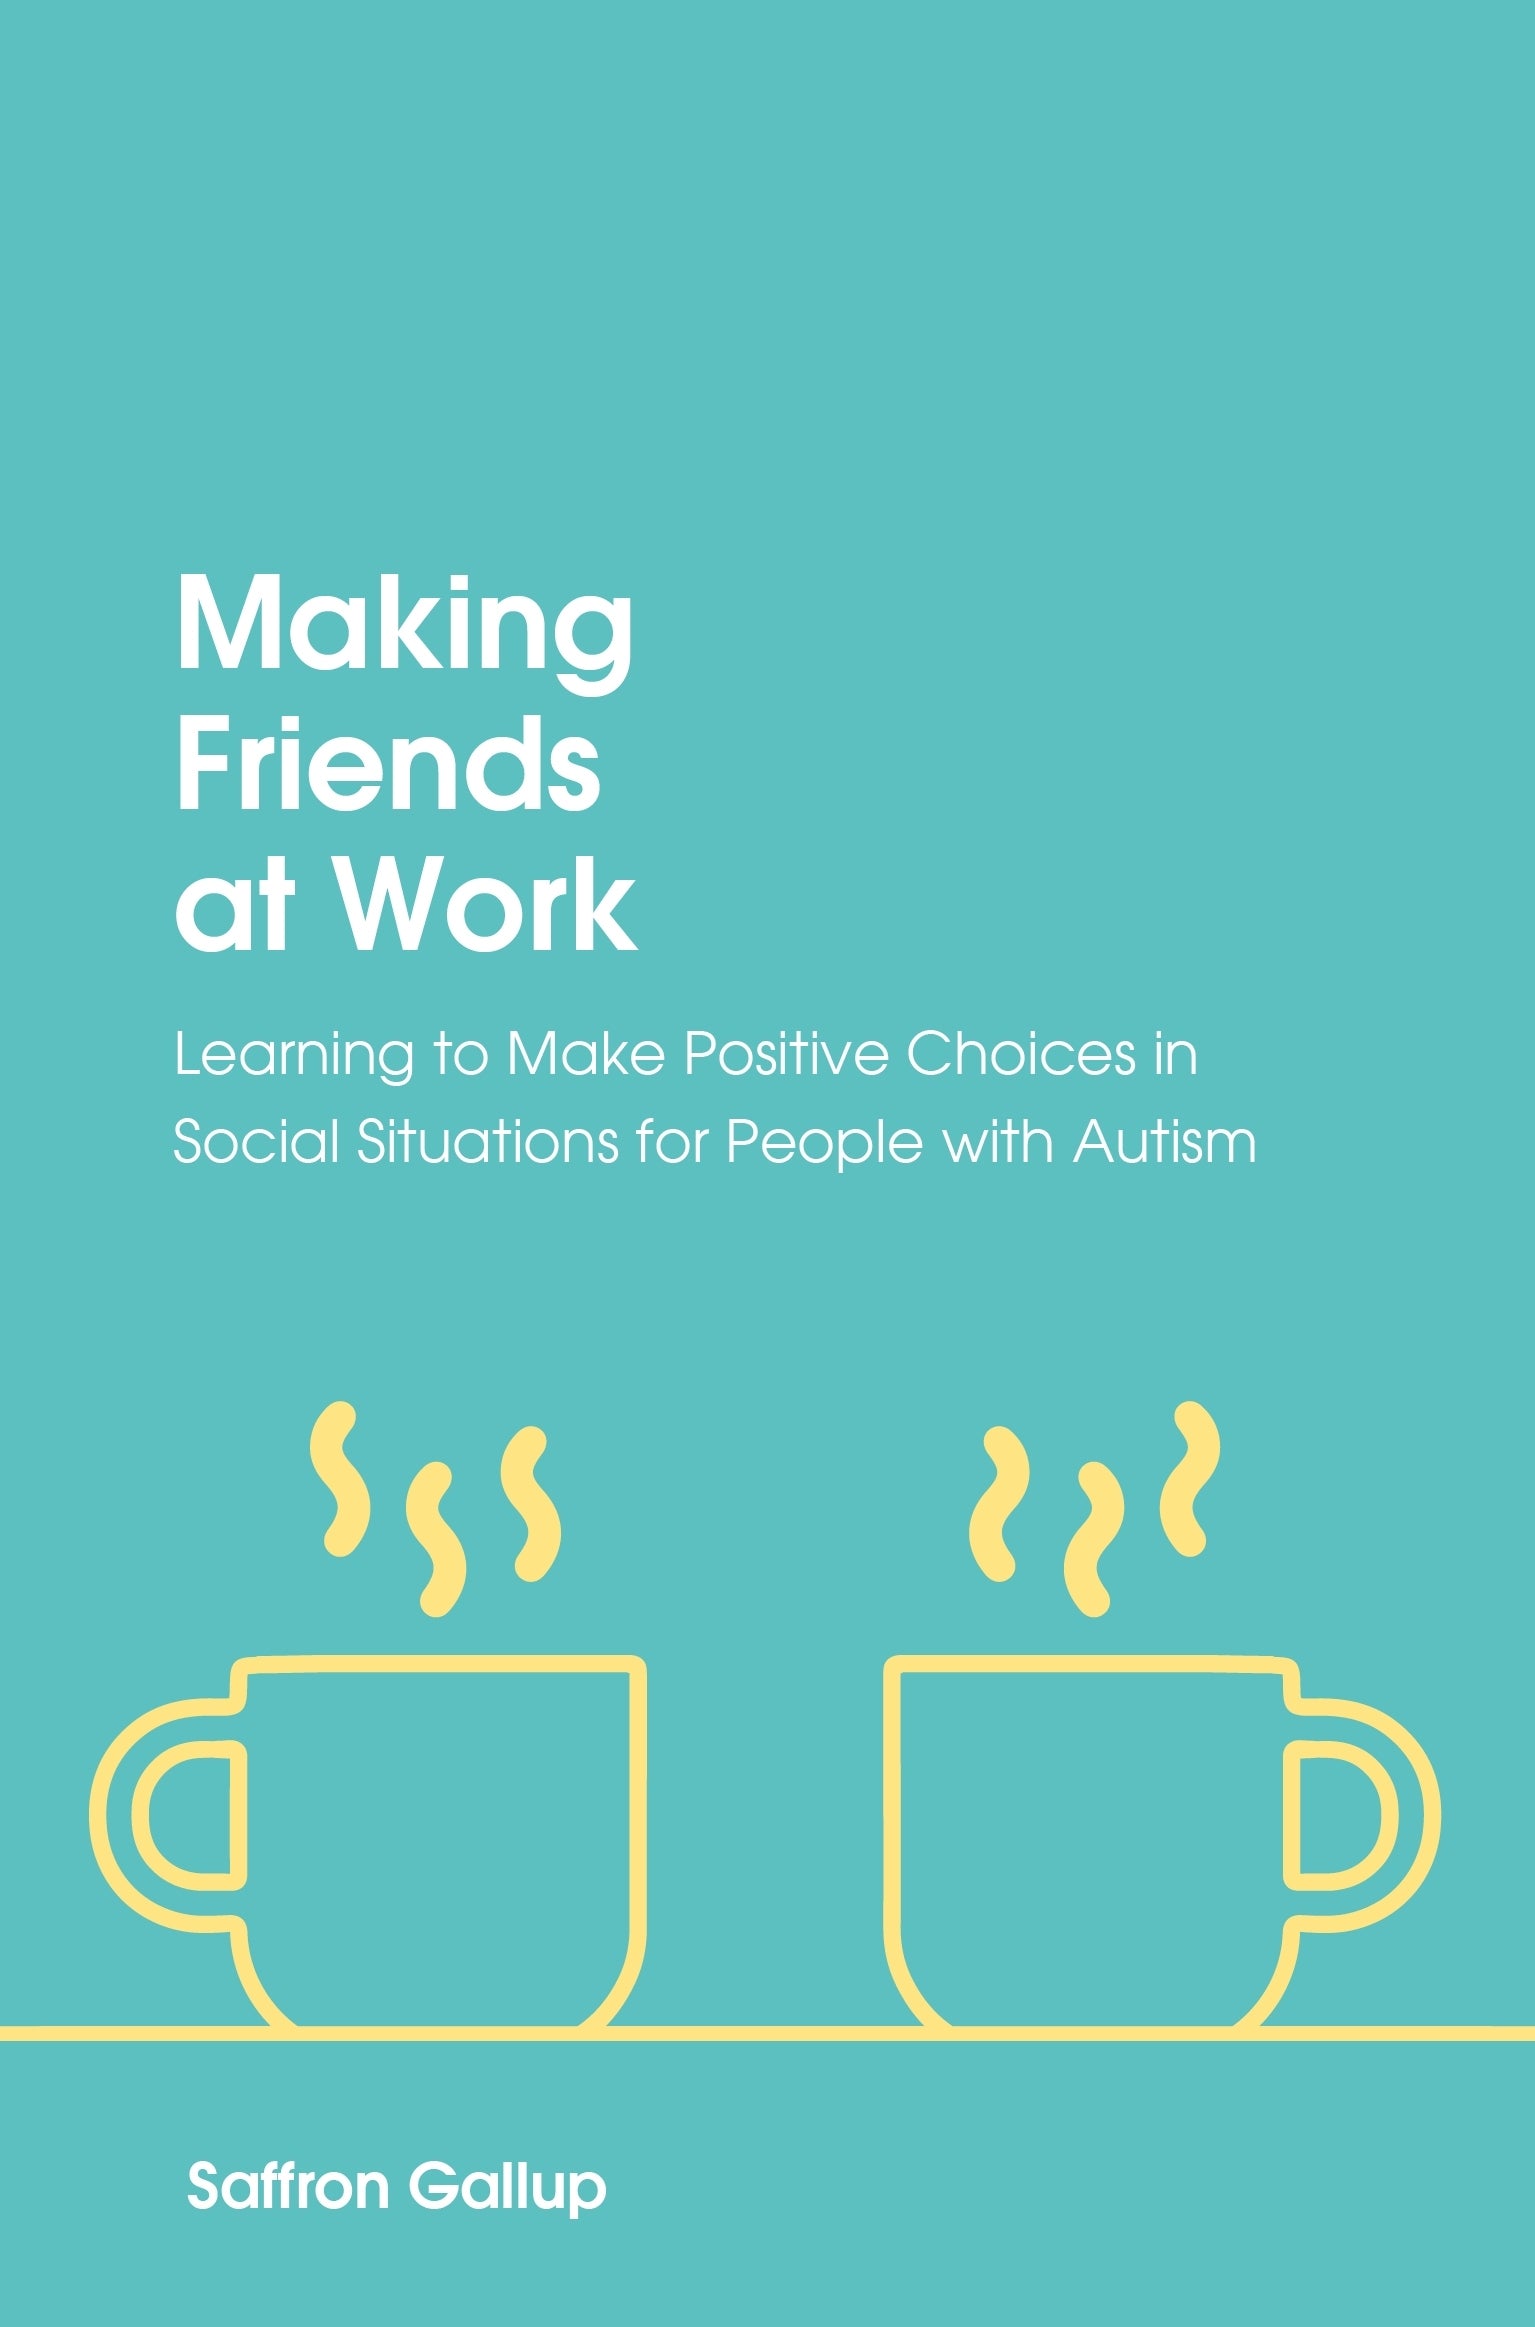 Making Friends at Work by Saffron Gallup